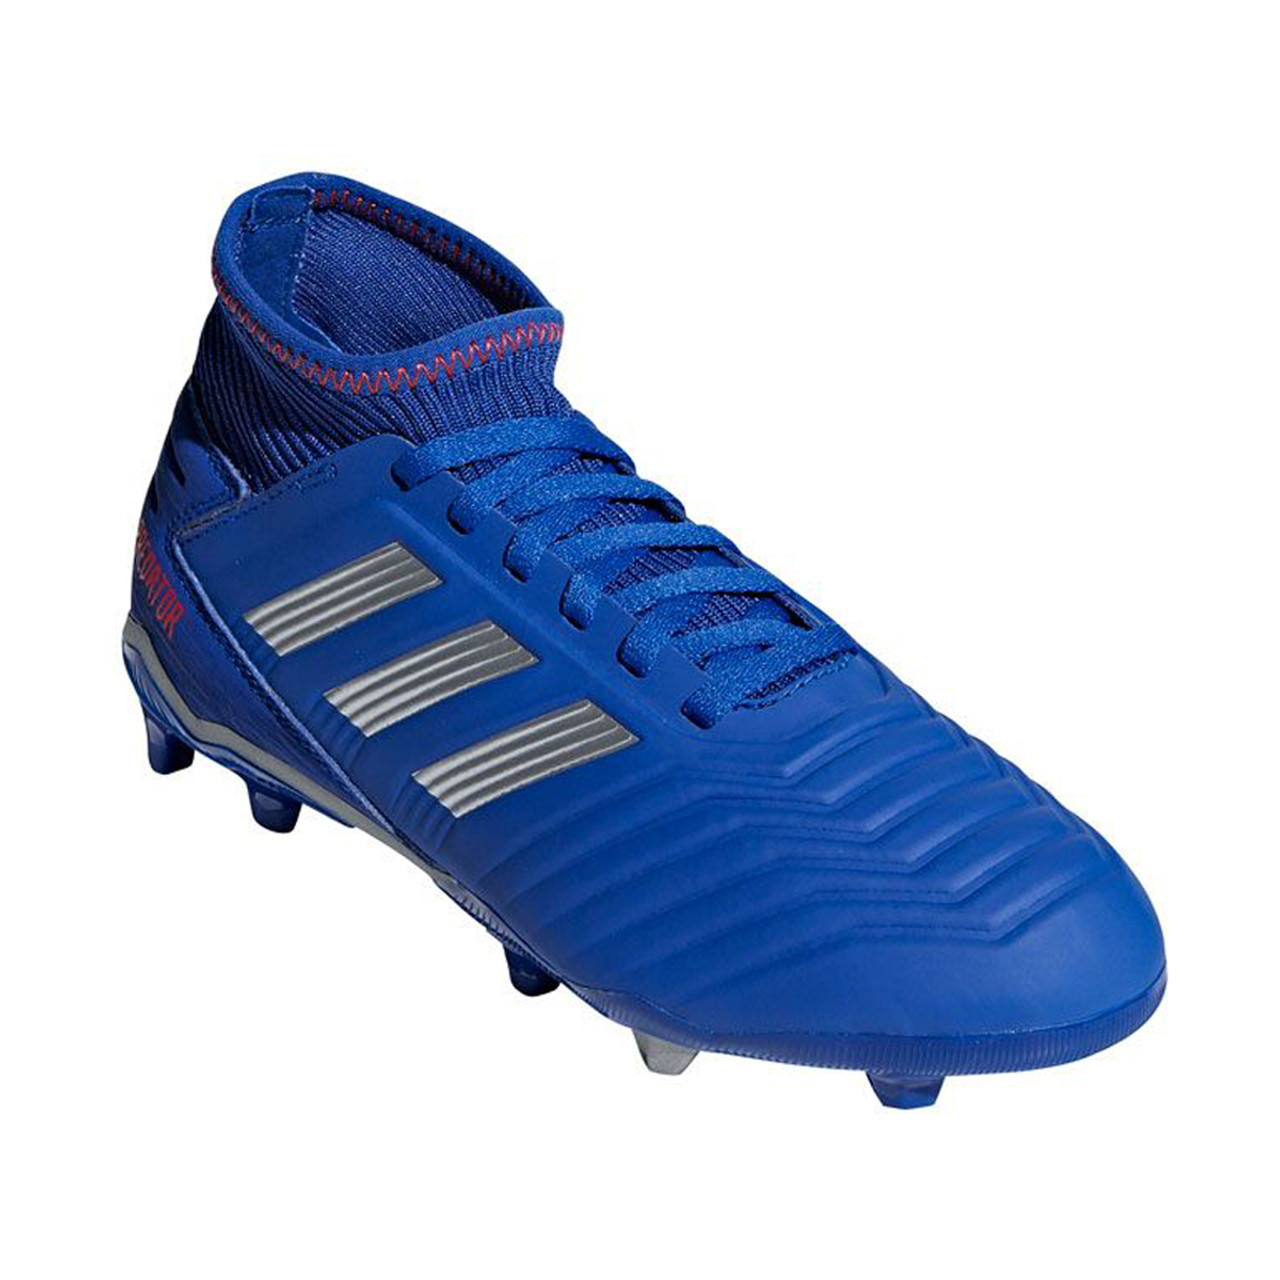 Adidas Predator 19.3 FG Junior Soccer Cleats CM8533 - Blue, Silver